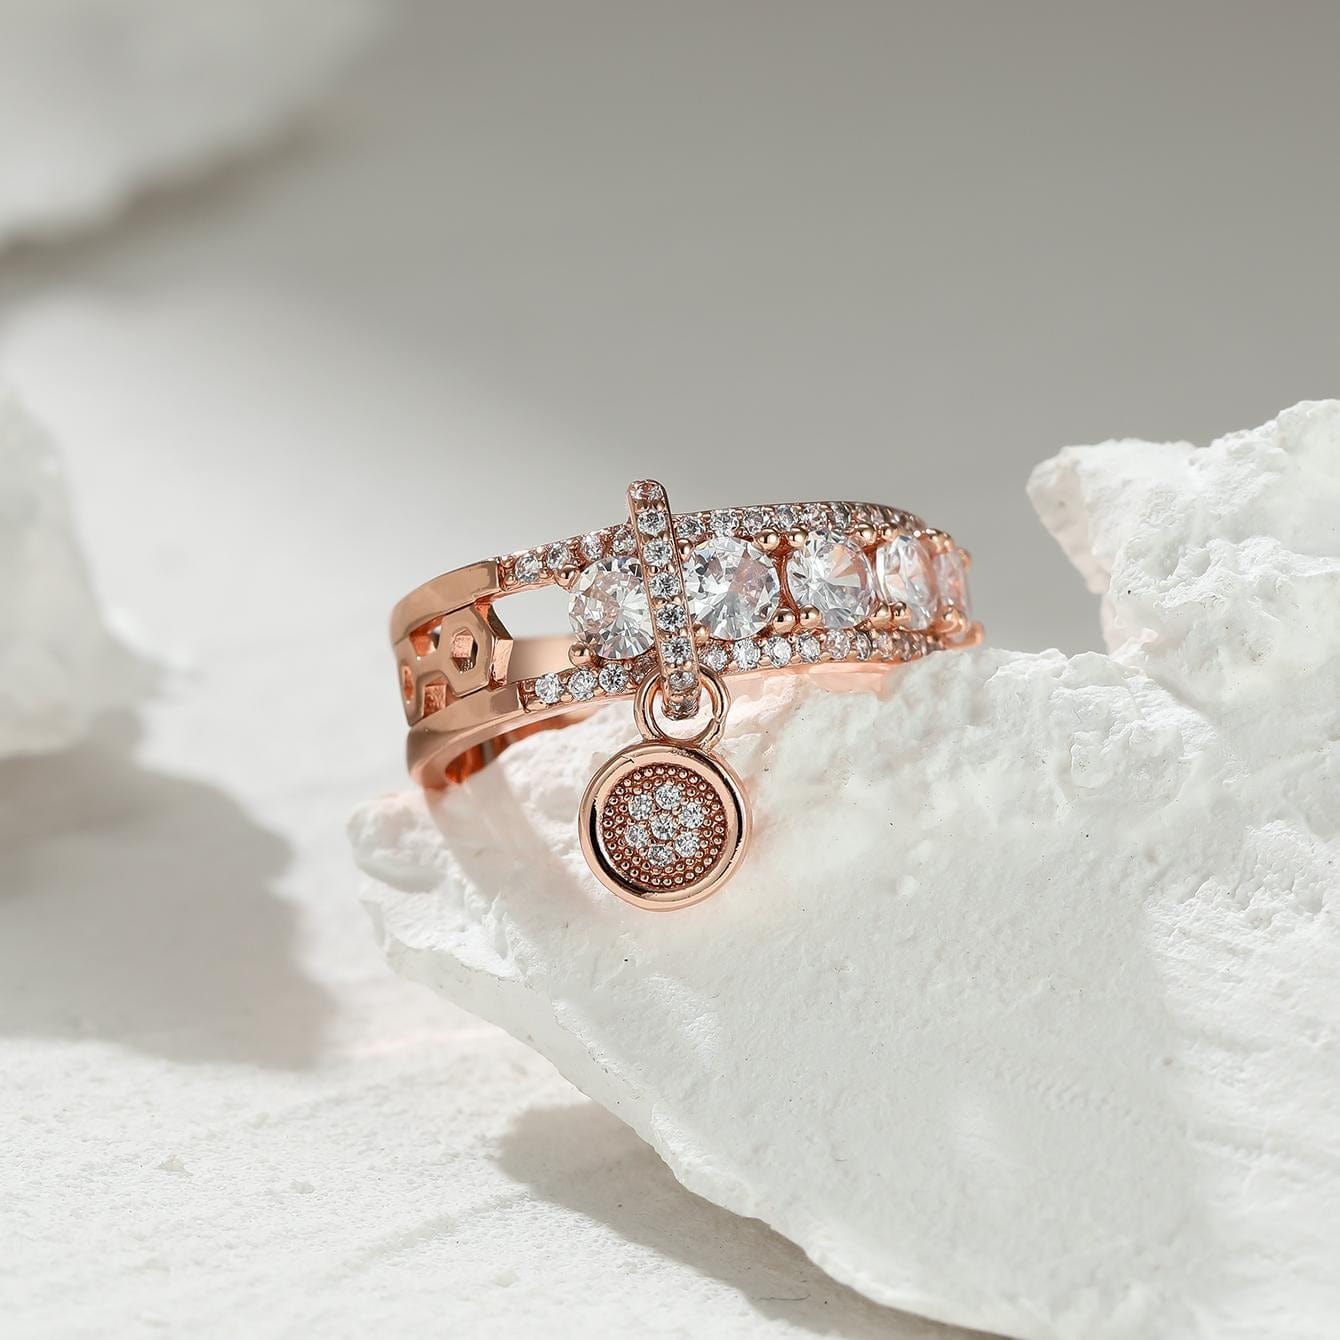 Ring - Woman's Inlaid Zircon Wedding Engagement Ring